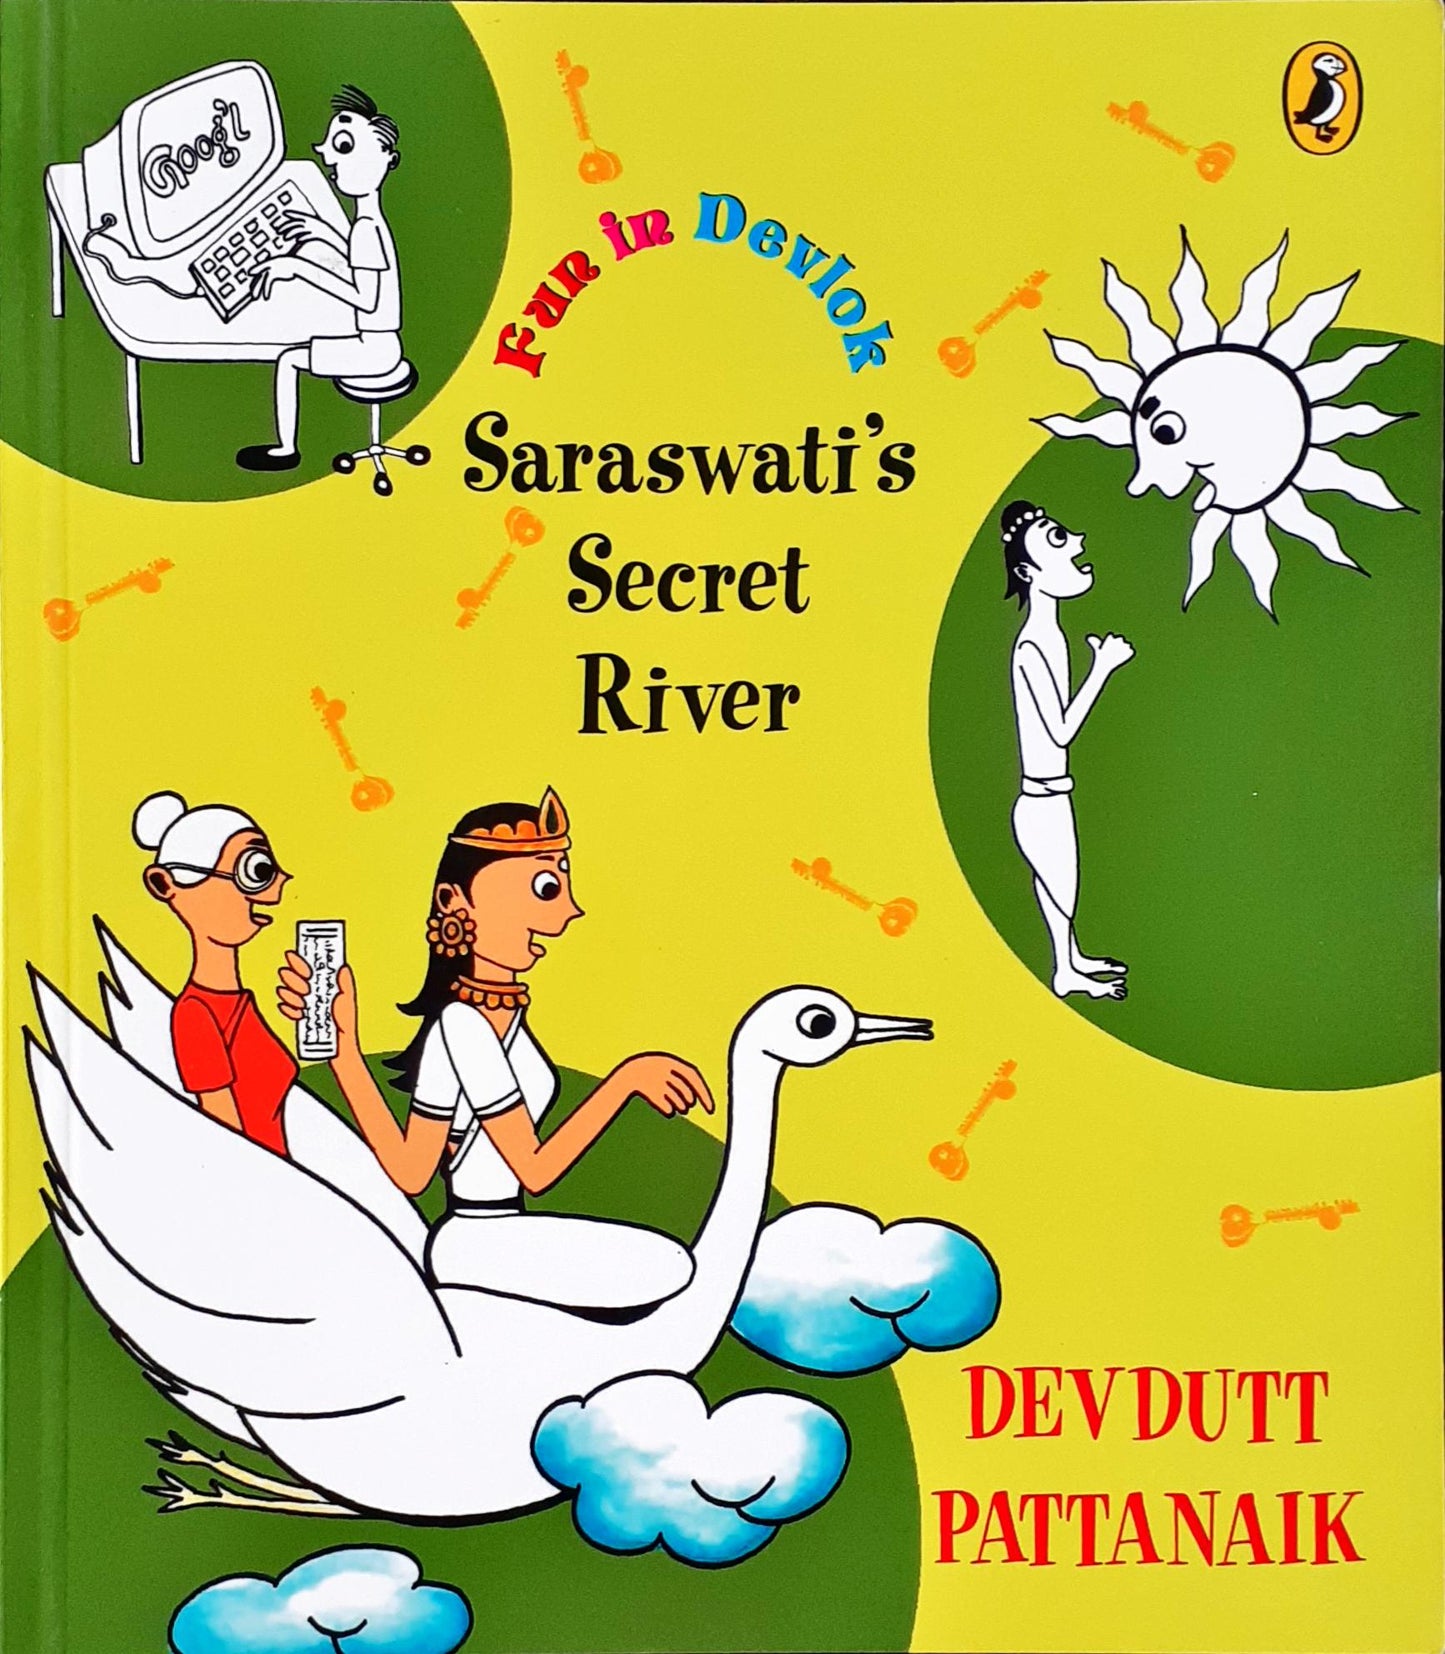 Fun in Devlok: Saraswati's Secret River by Devdutt Pattanaik